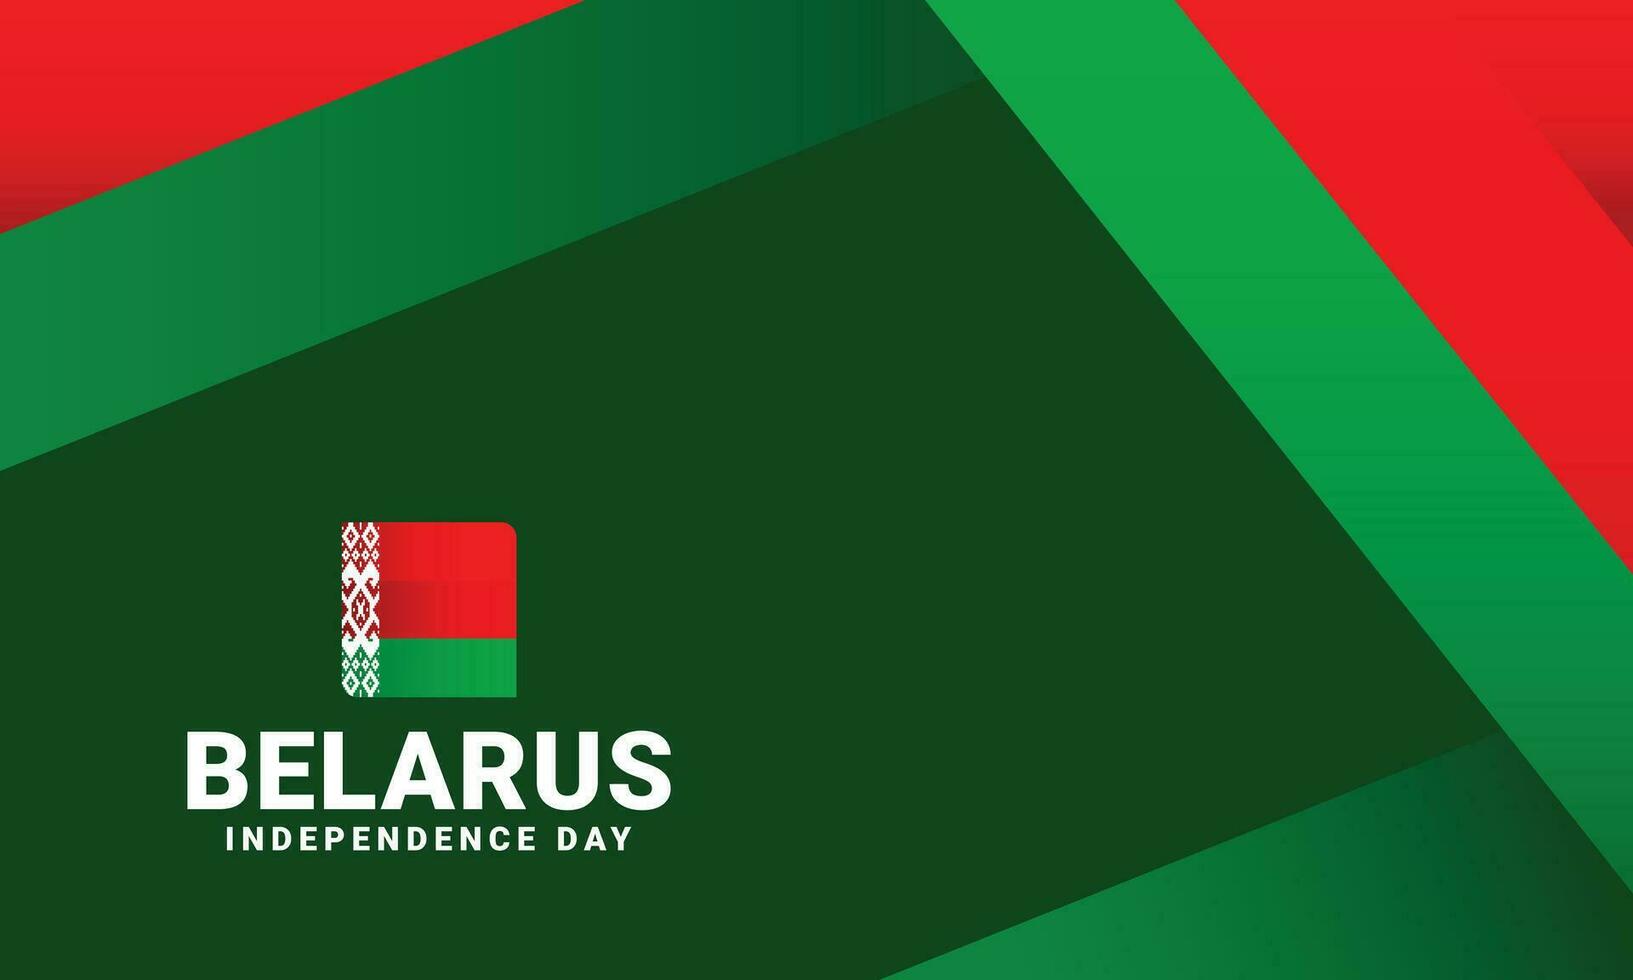 Belarus Independence day event celebrate vector